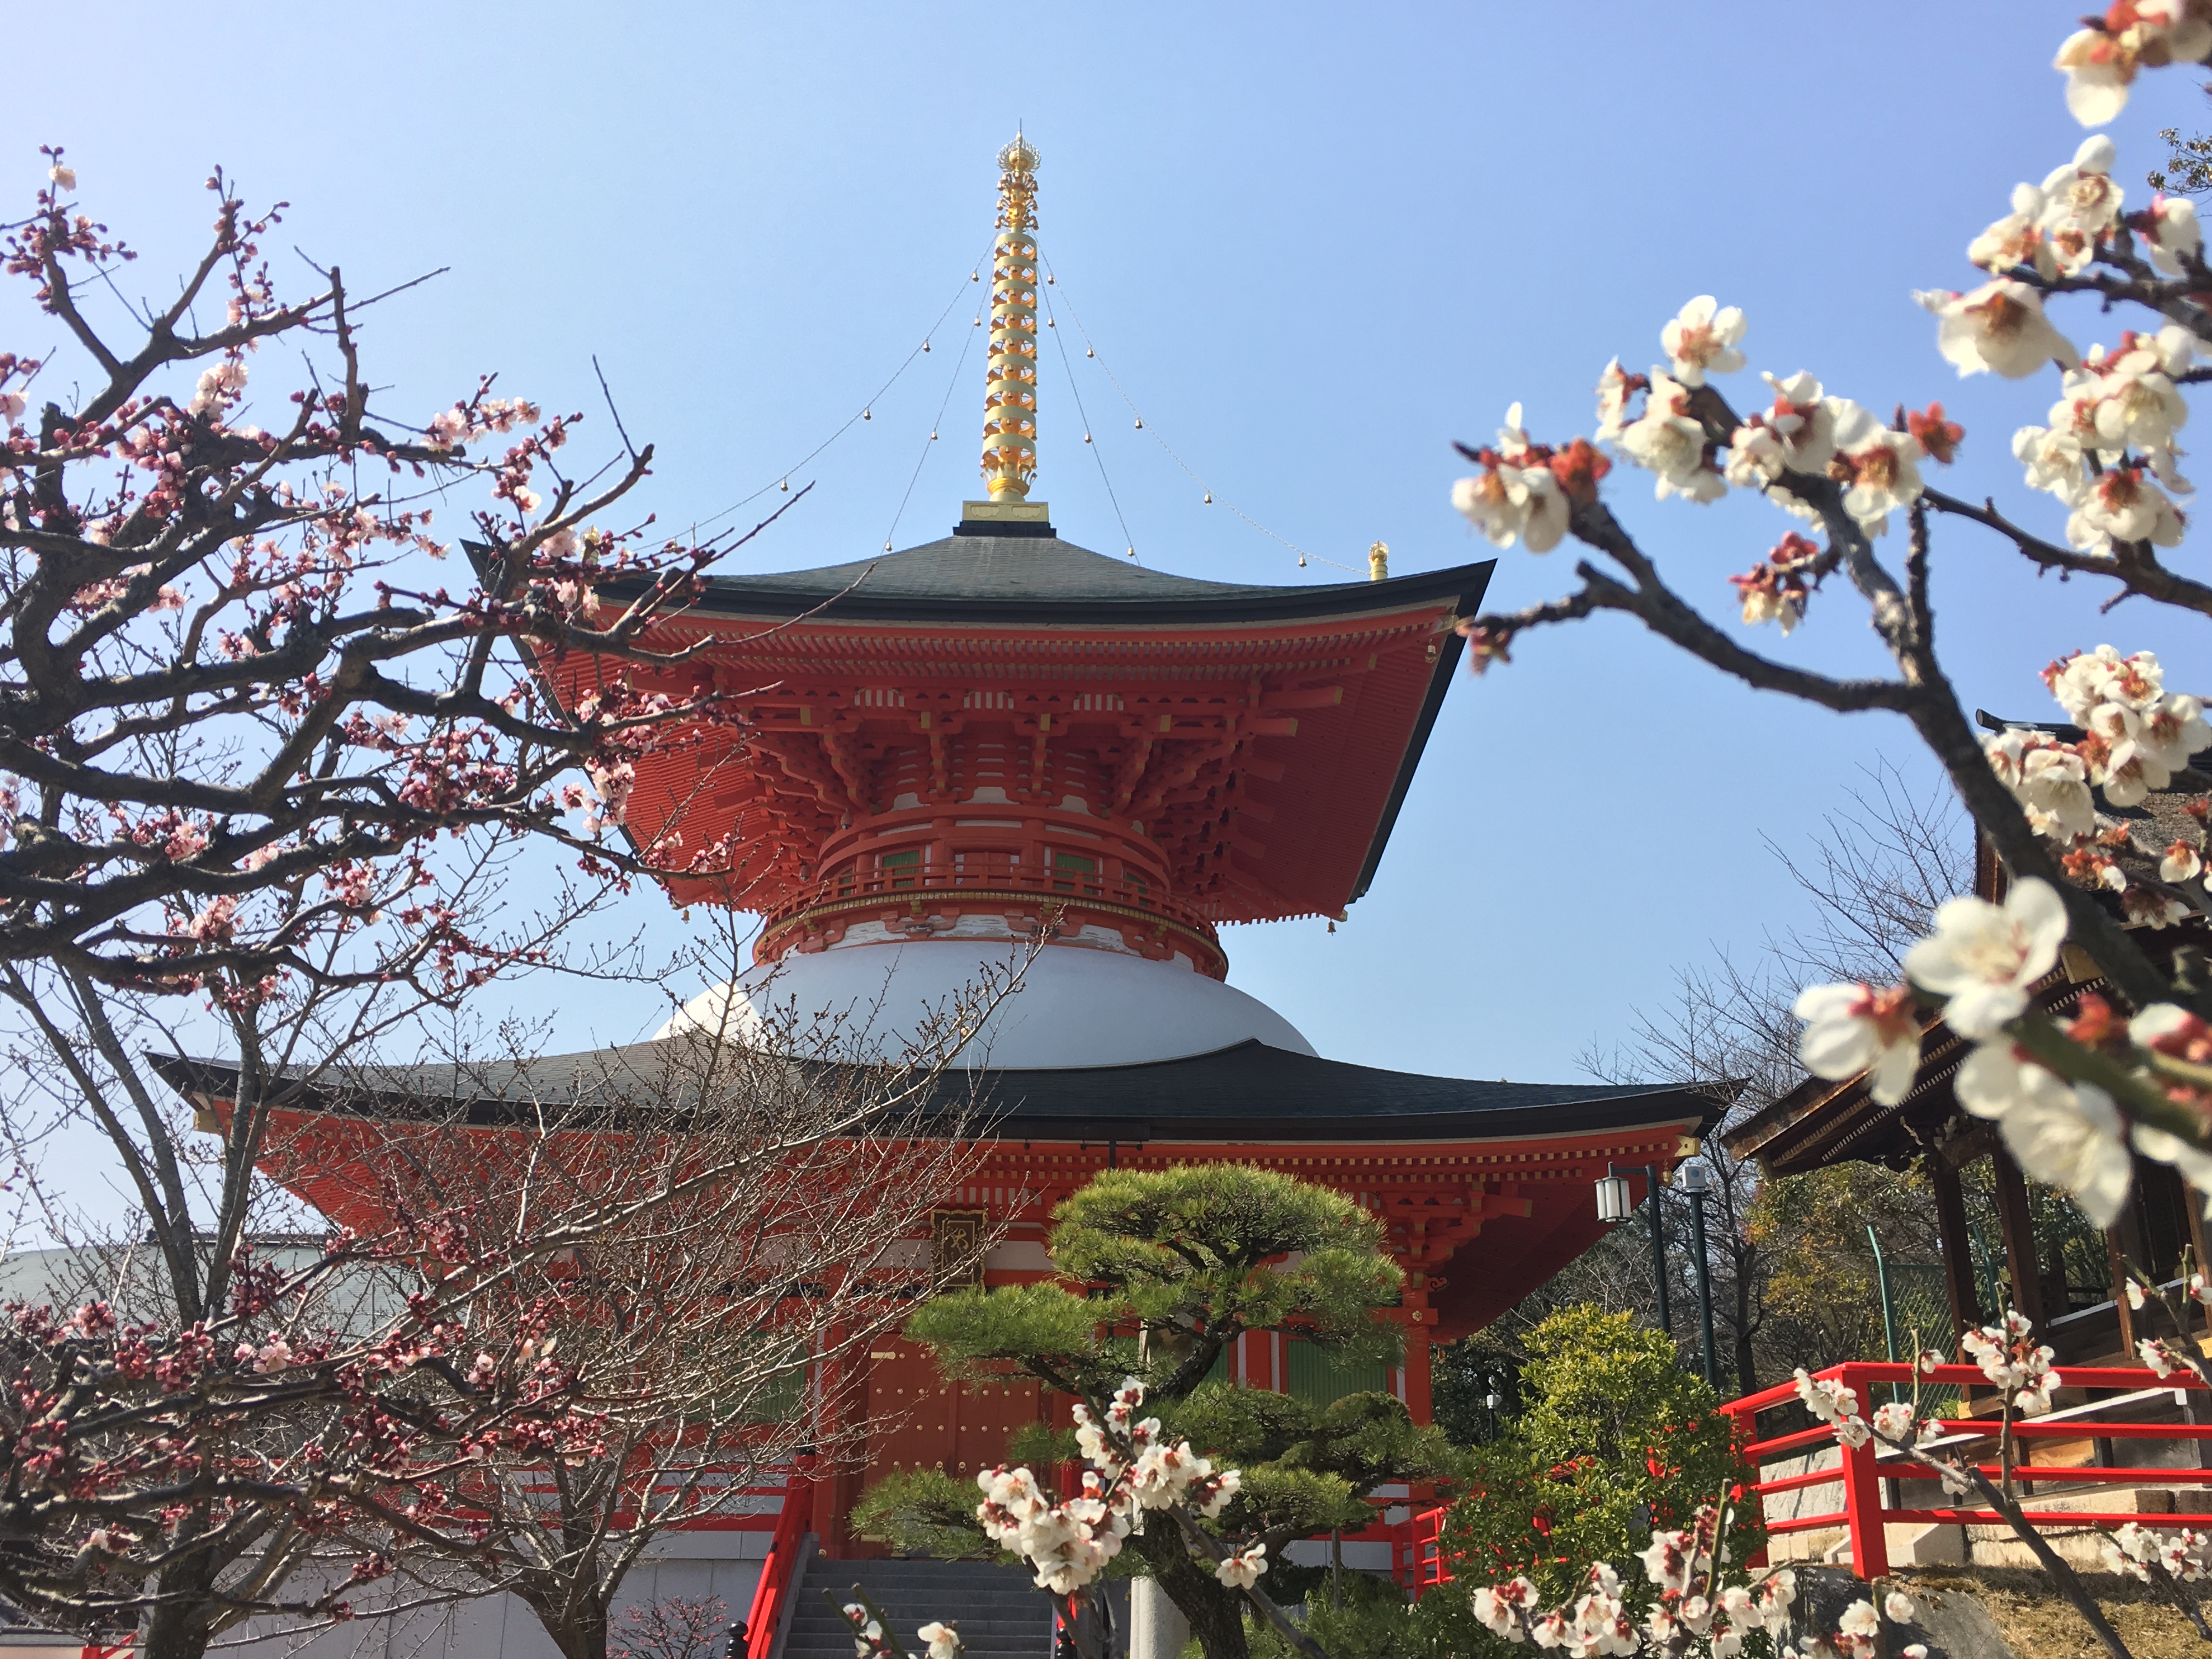 Tahoto of Nakayama-dera surrounded by plum blossoms